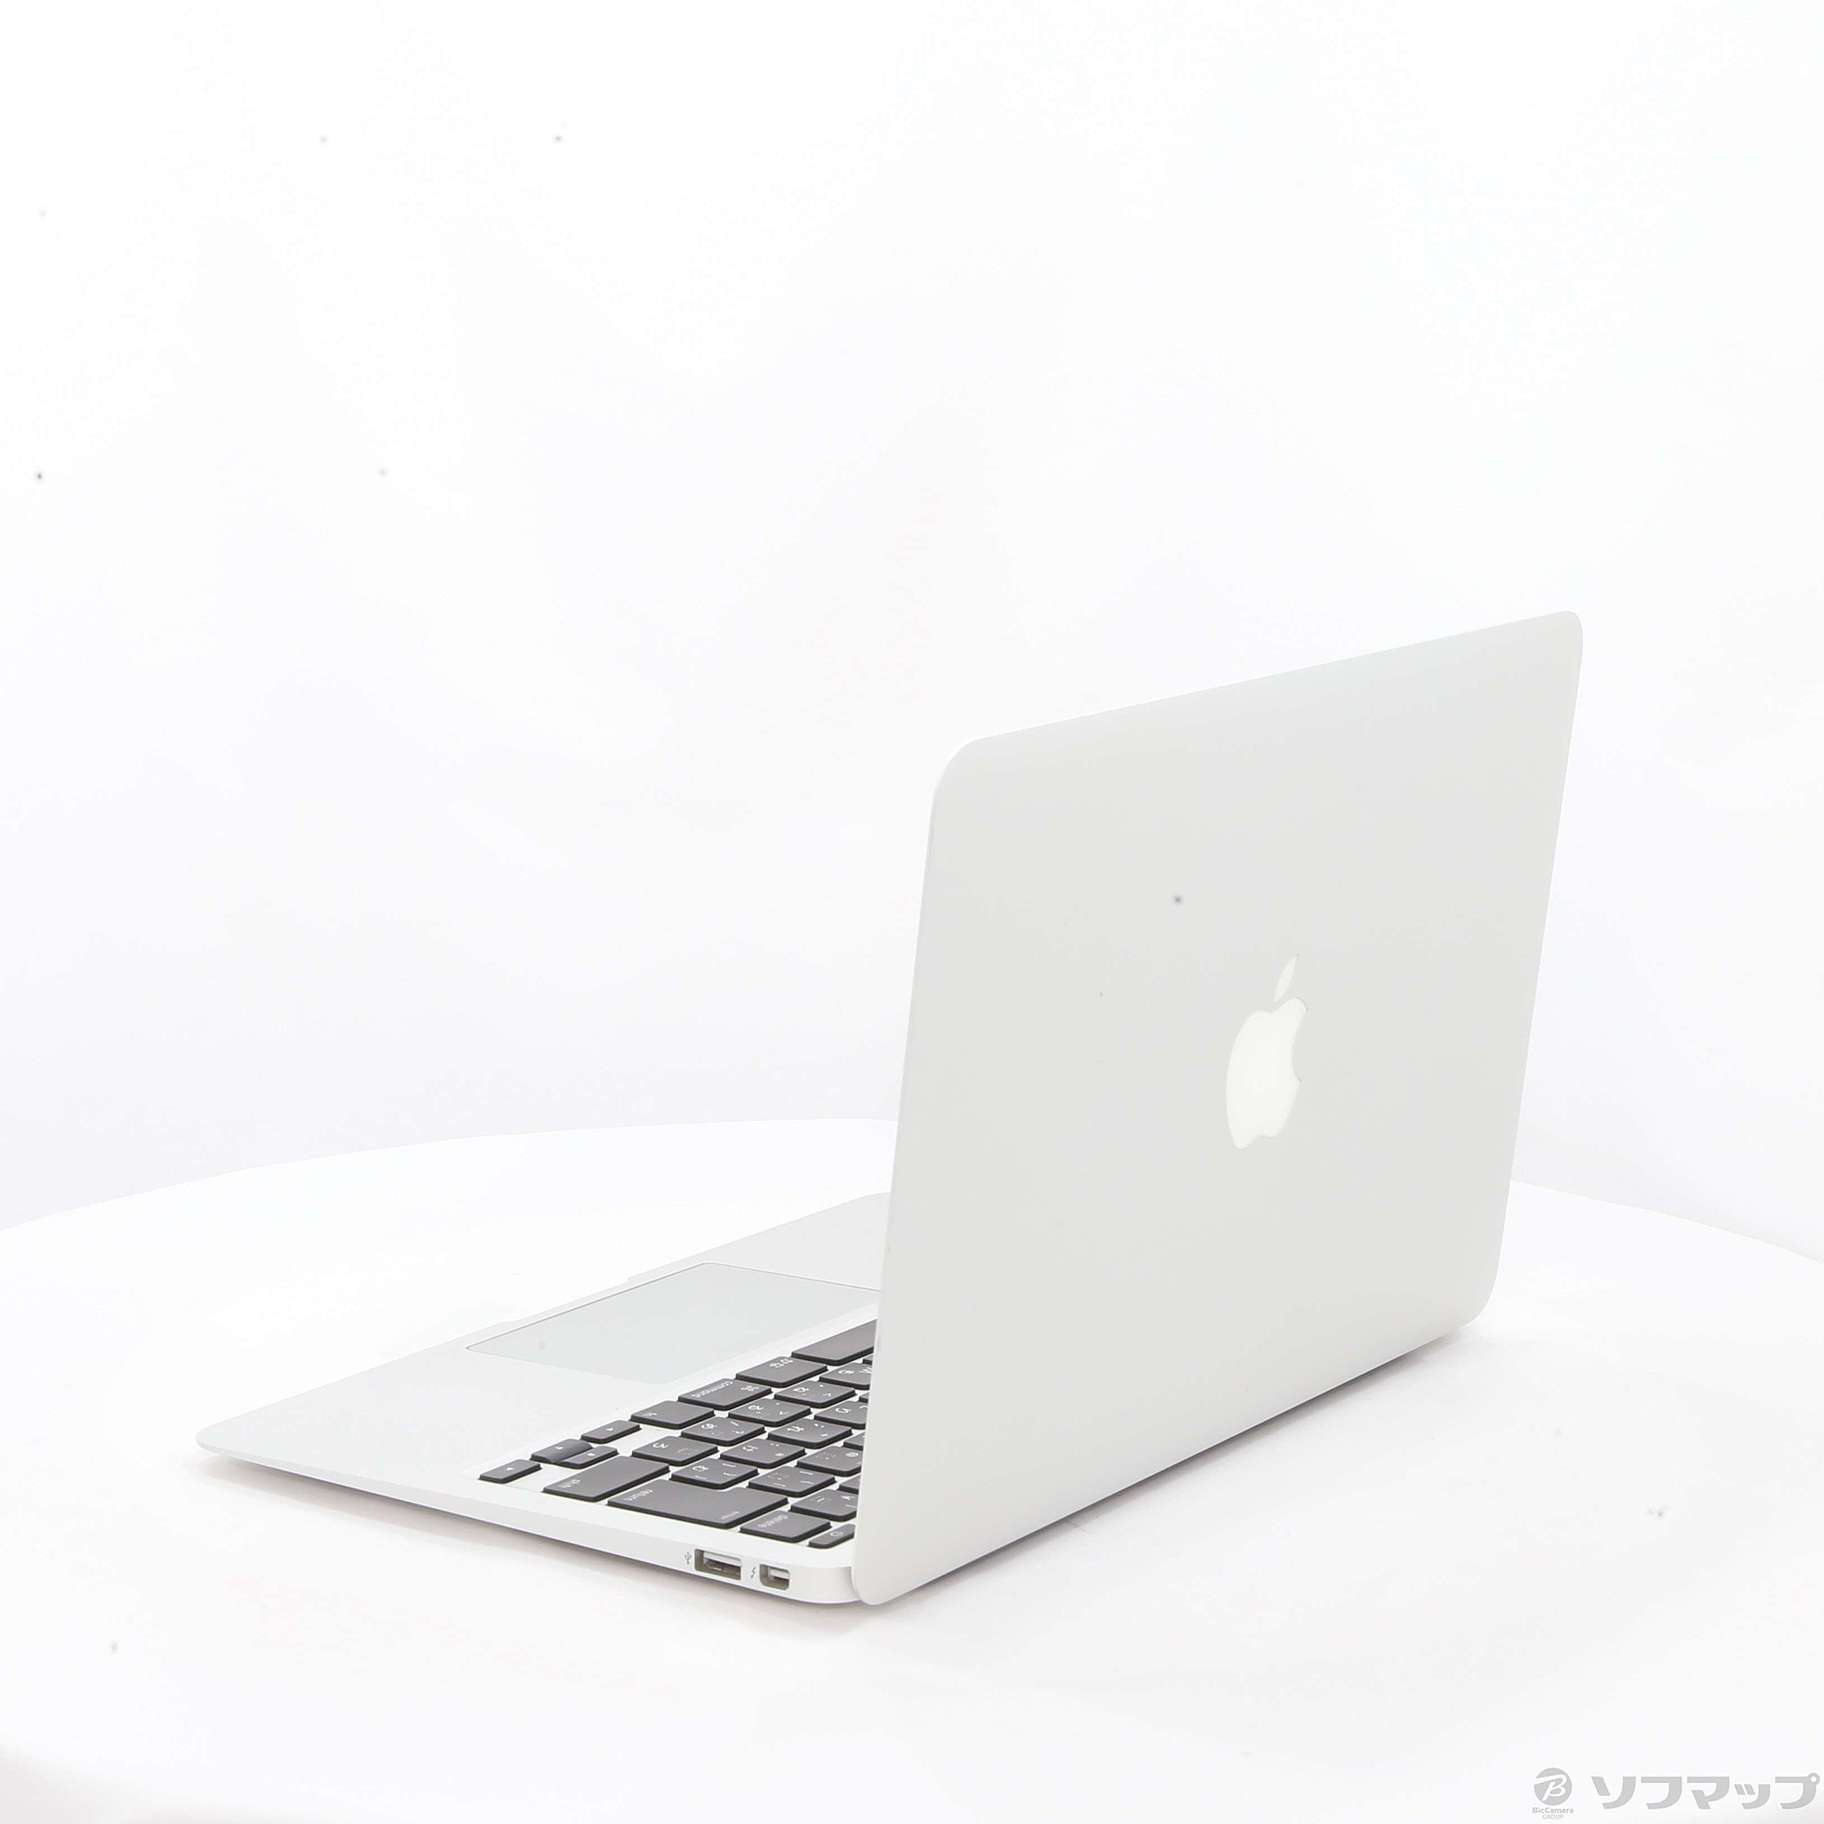 中古】MacBook Air 11.6-inch Mid 2012 MD223J／A Core_i5 1.7GHz 4GB